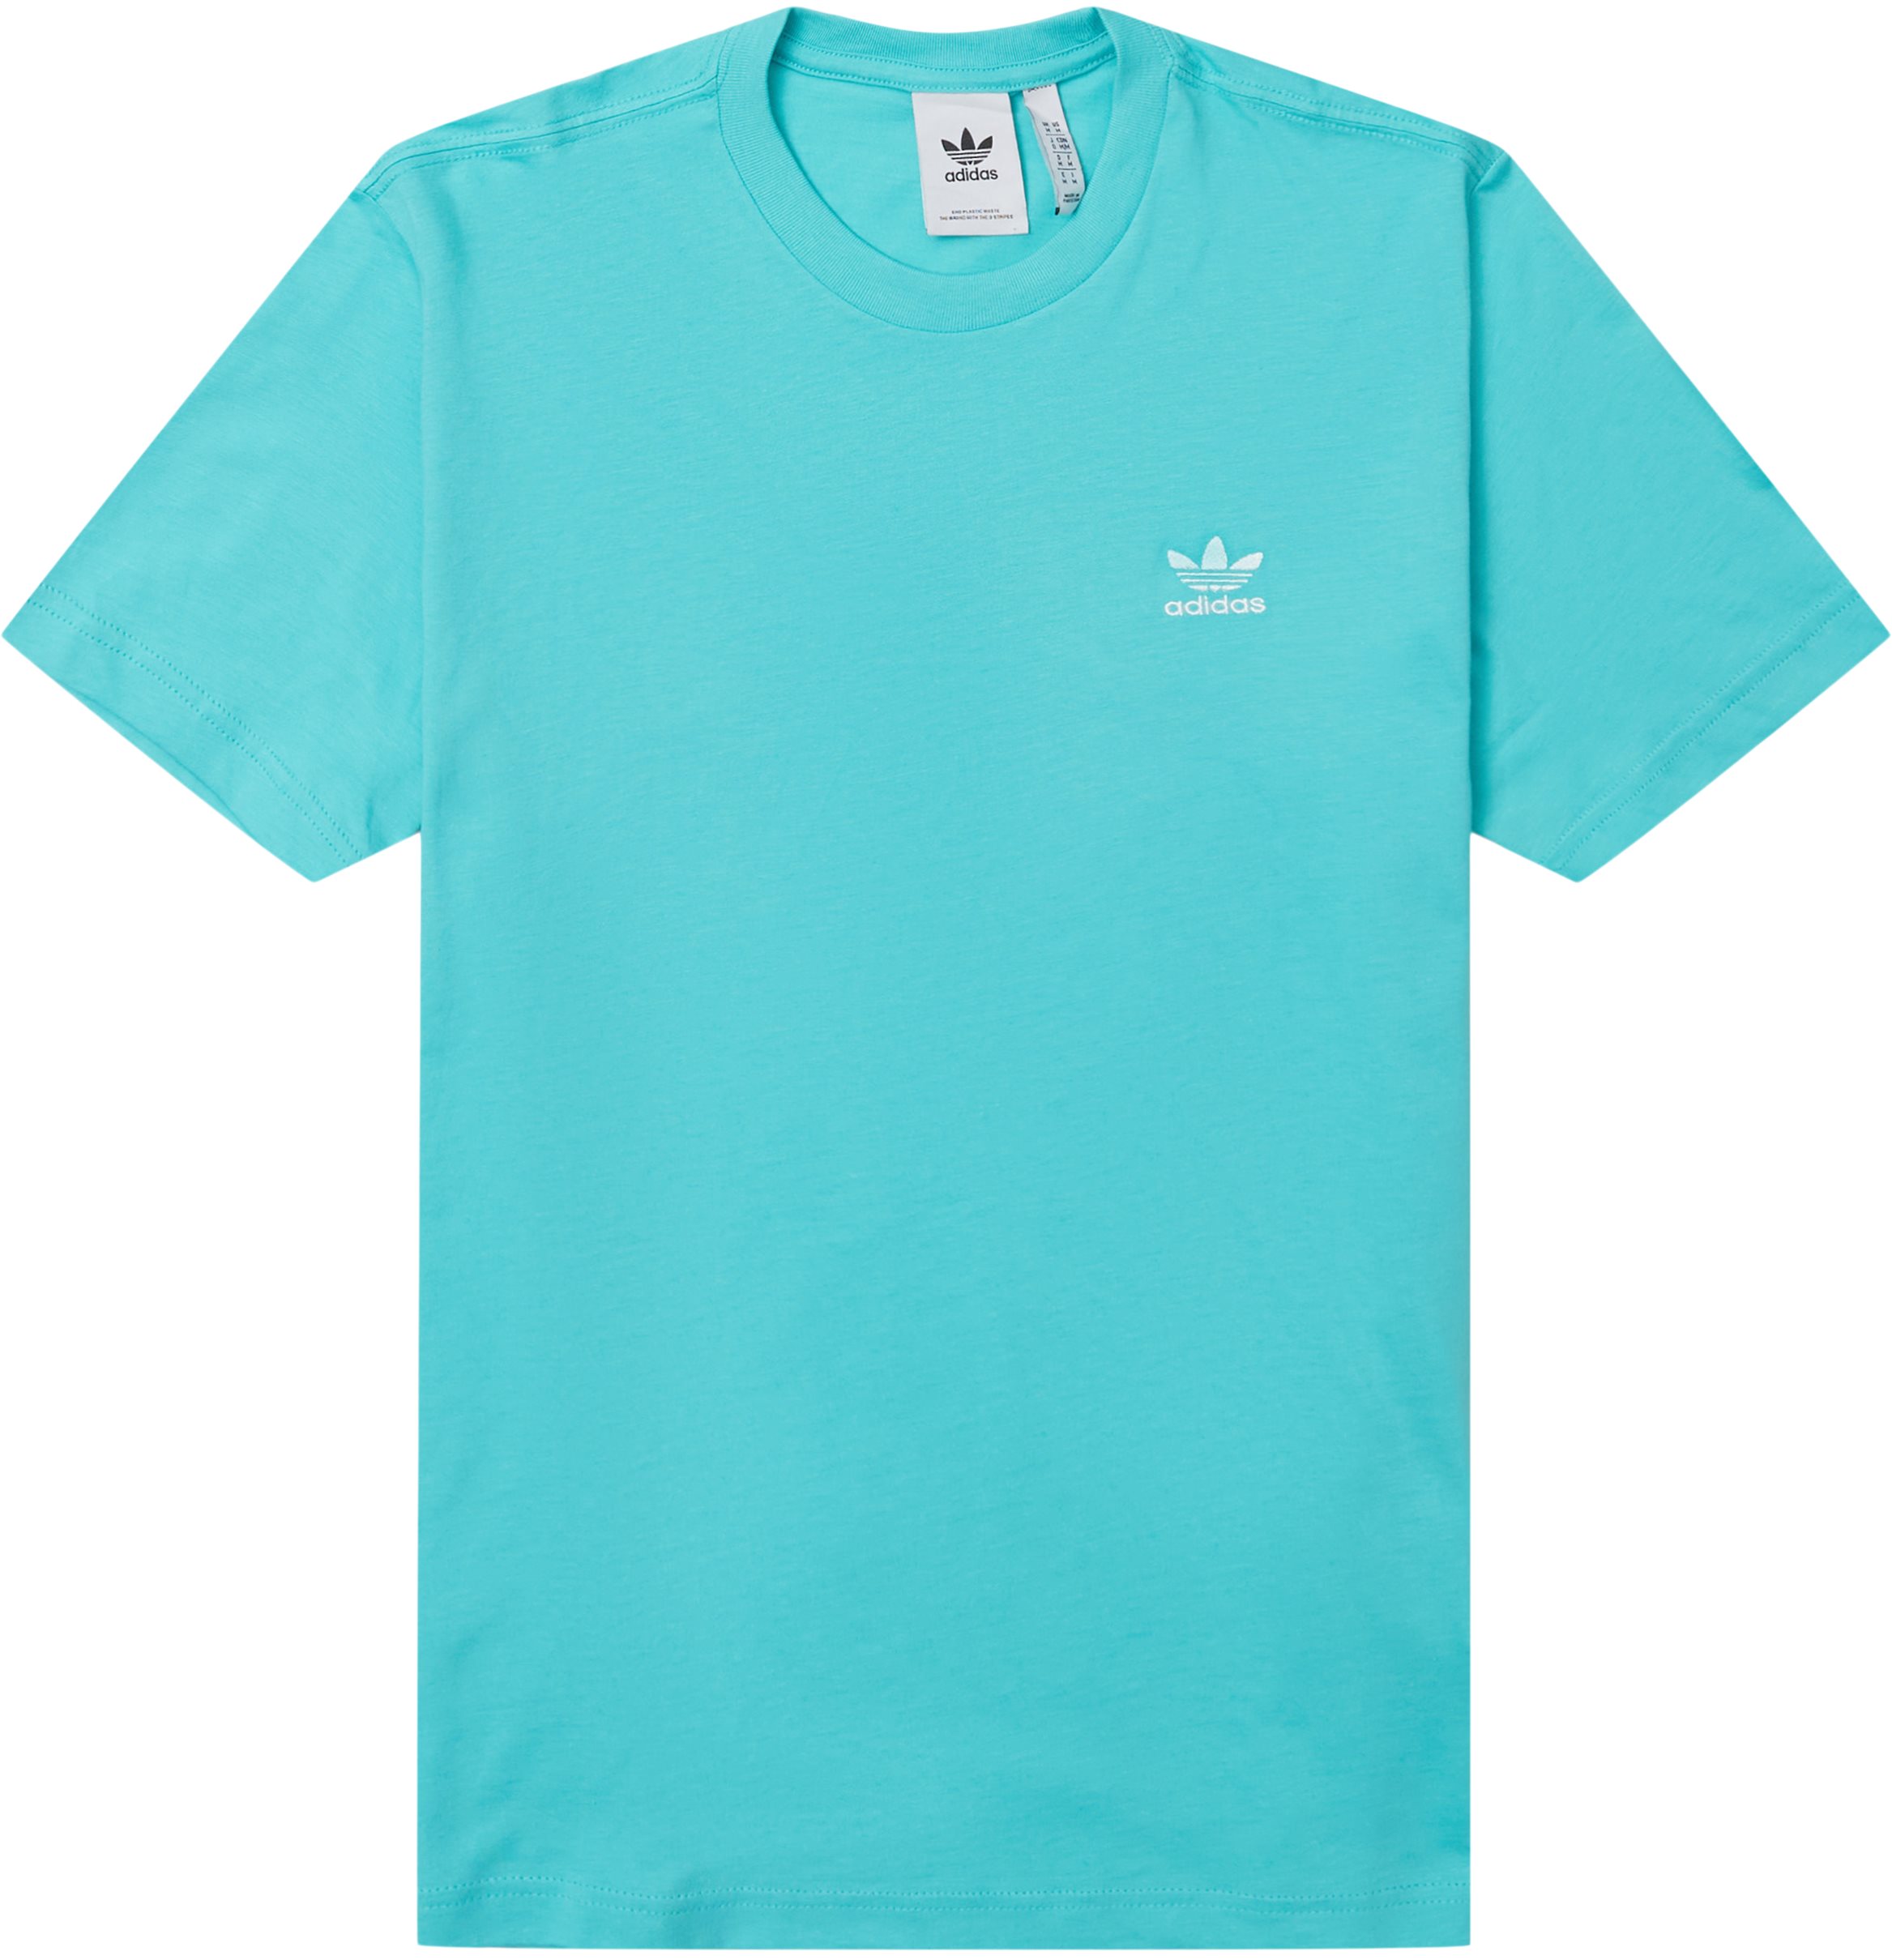 Essential Tee  - T-shirts - Regular fit - Blue